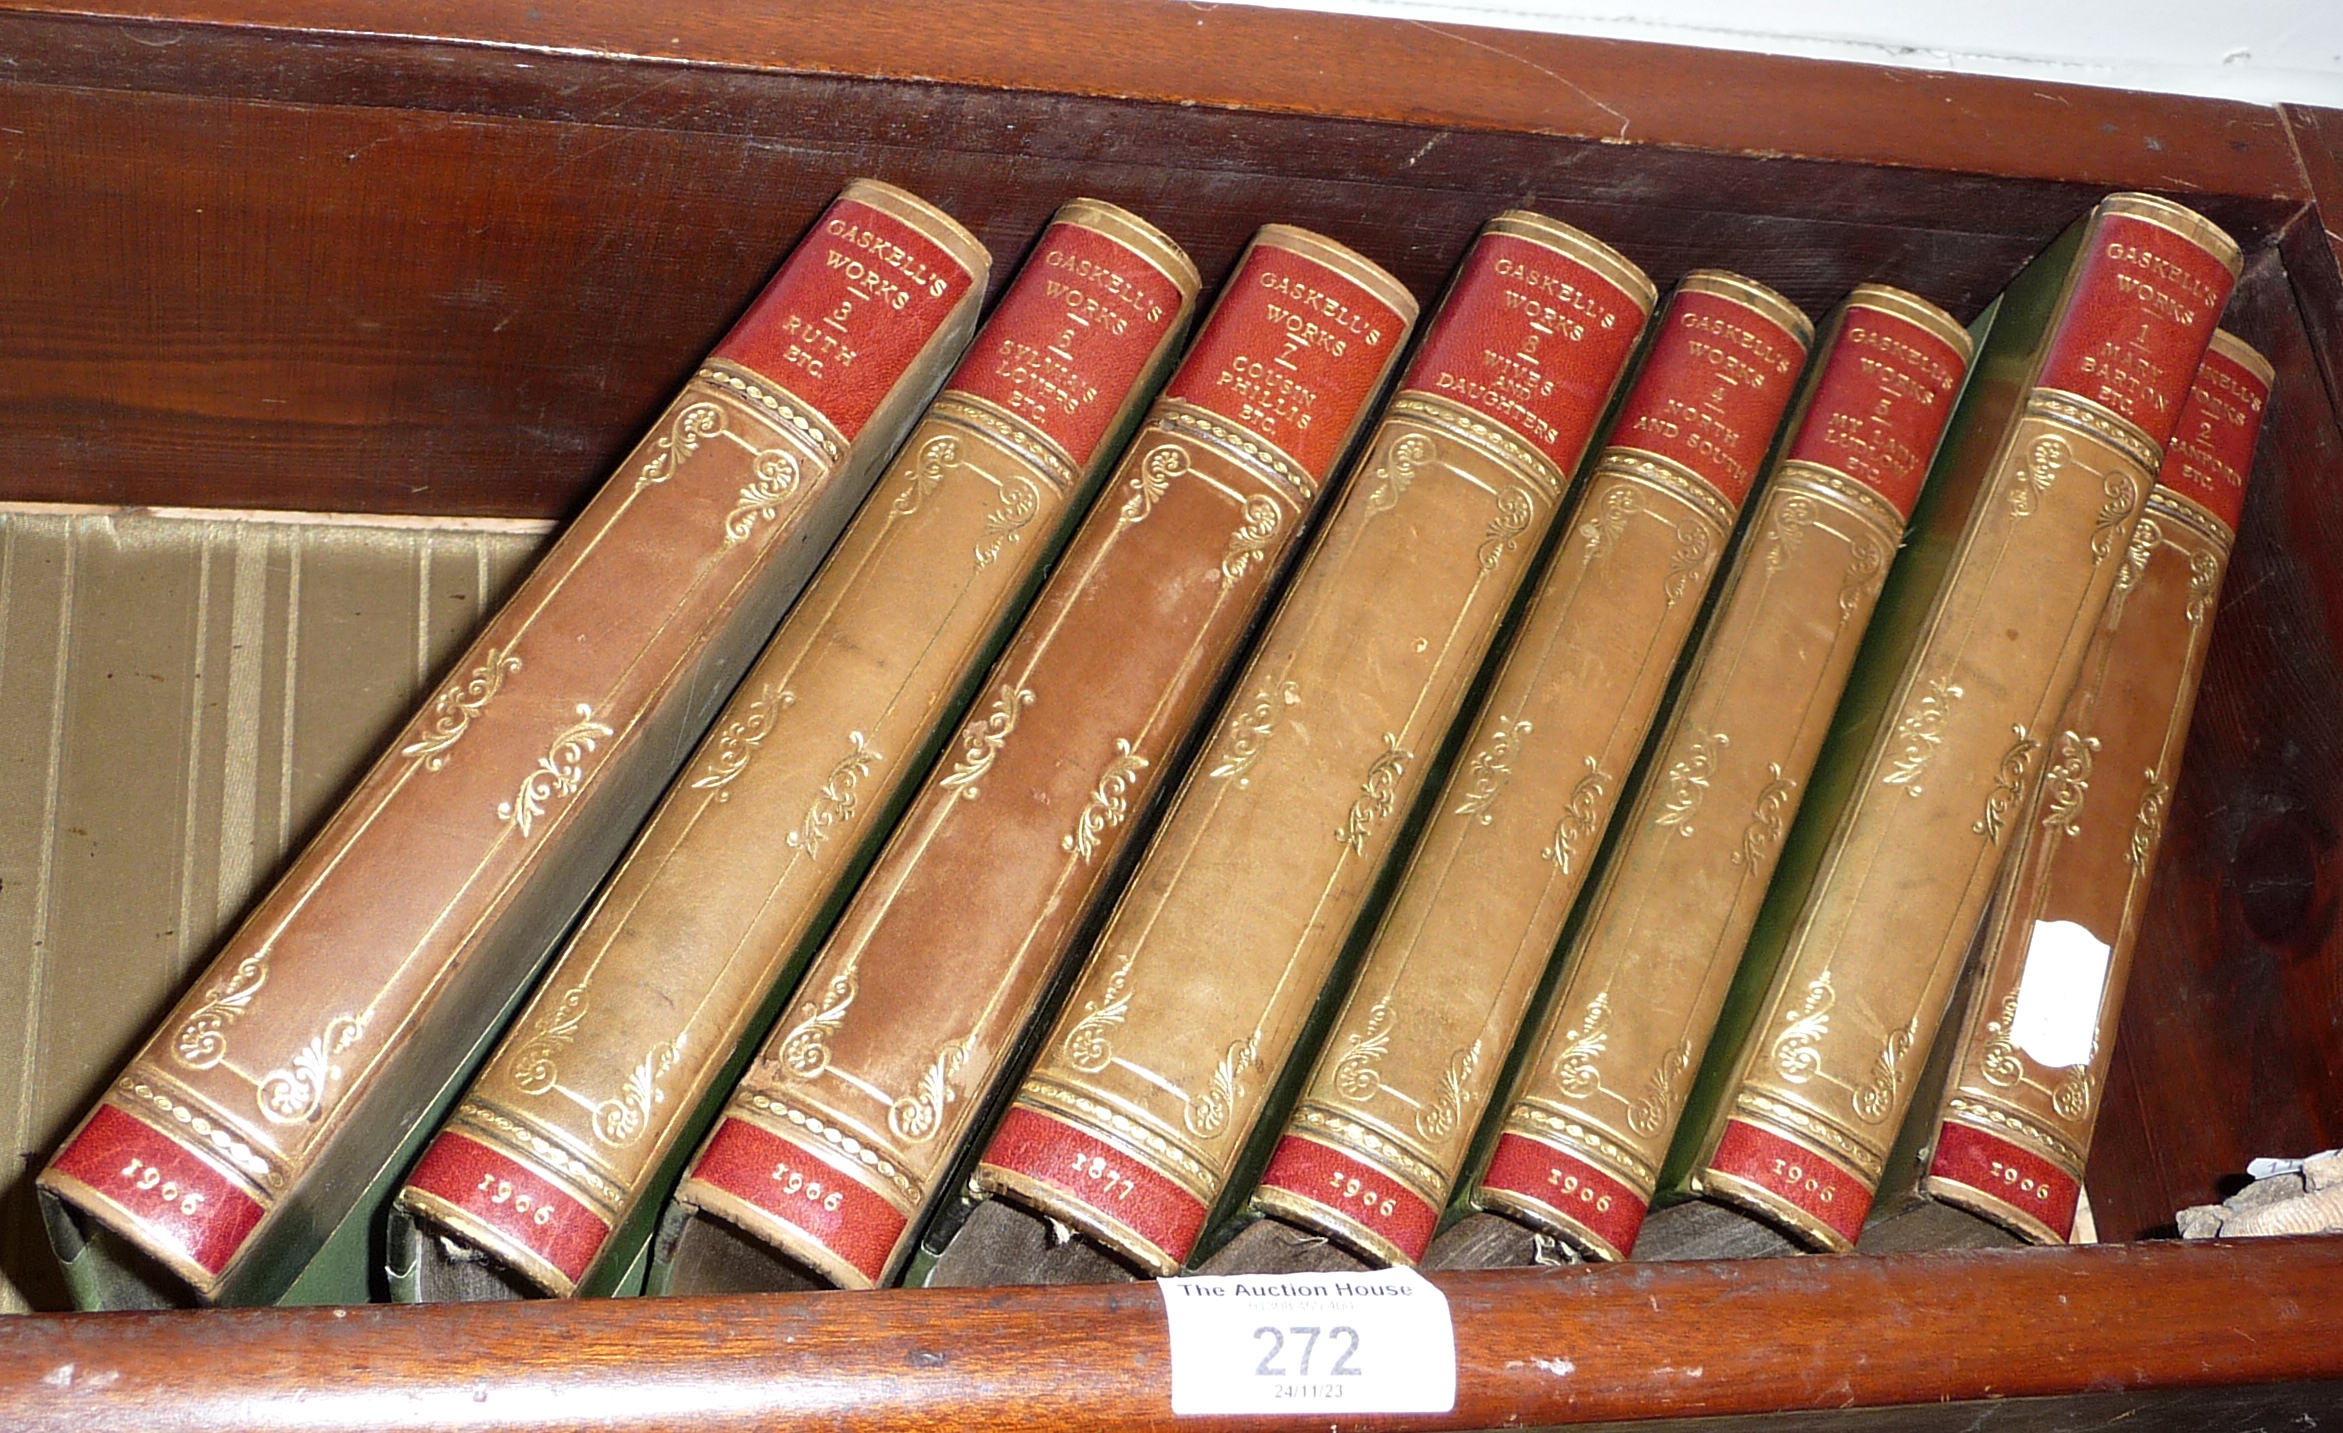 8 vols of Gaskells Works, 1906, Knutsford Edition pub. Smith, Elder & Co., half leather